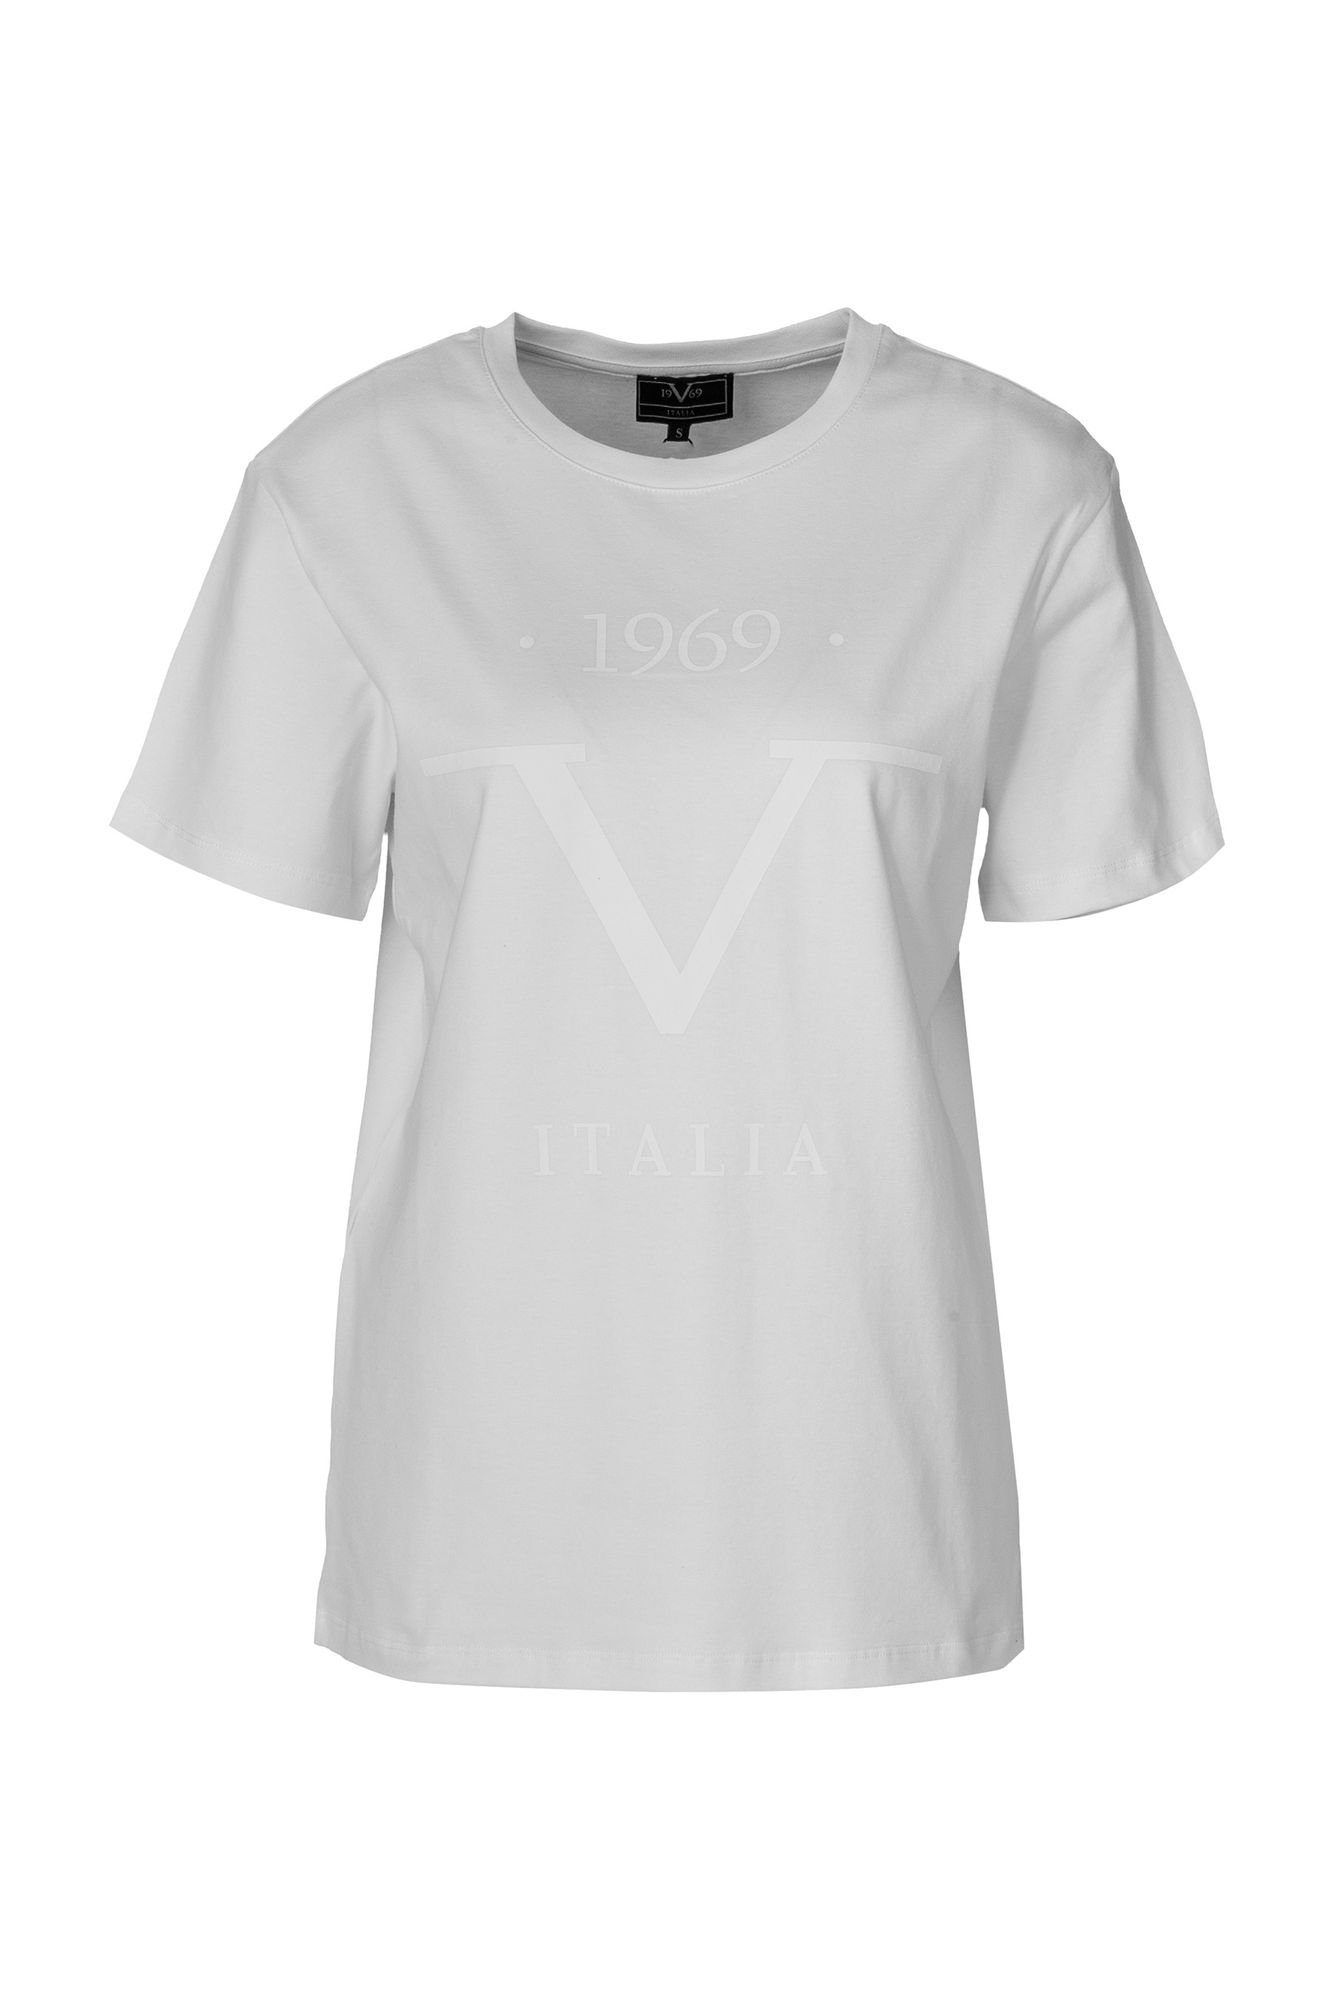 19V69 Italia Diego-033 by T-Shirt mit Print Versace